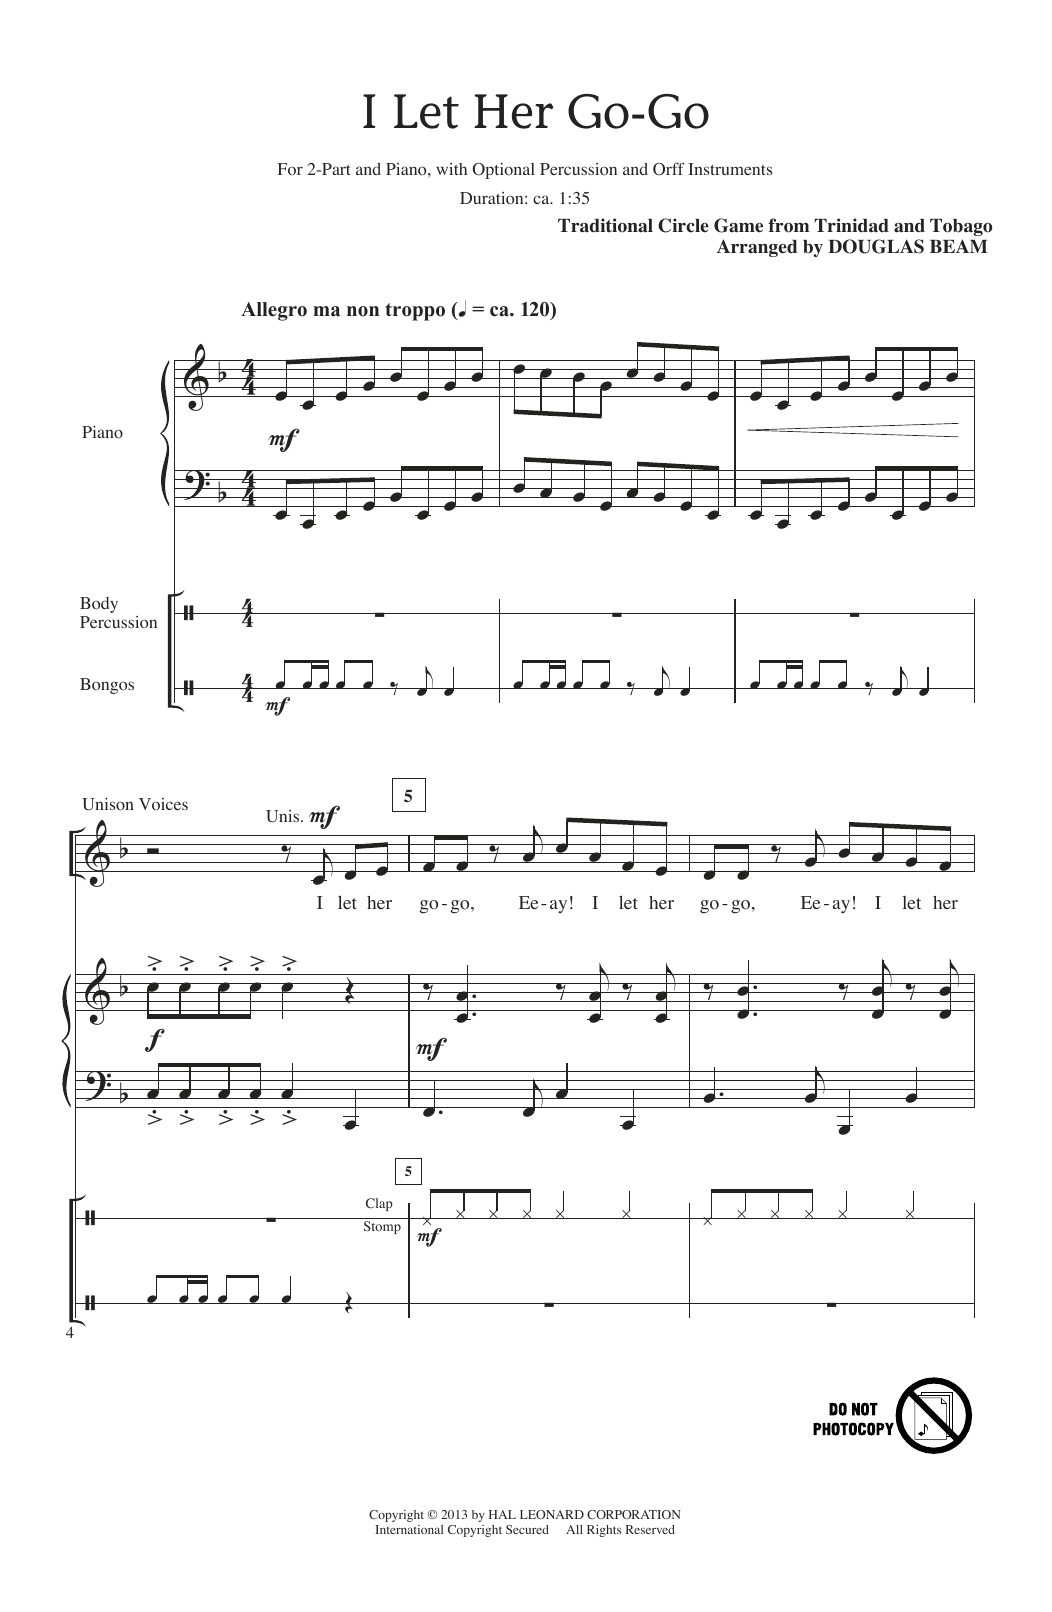 Douglas Beam I Let Her Go-Go sheet music notes and chords arranged for 2-Part Choir